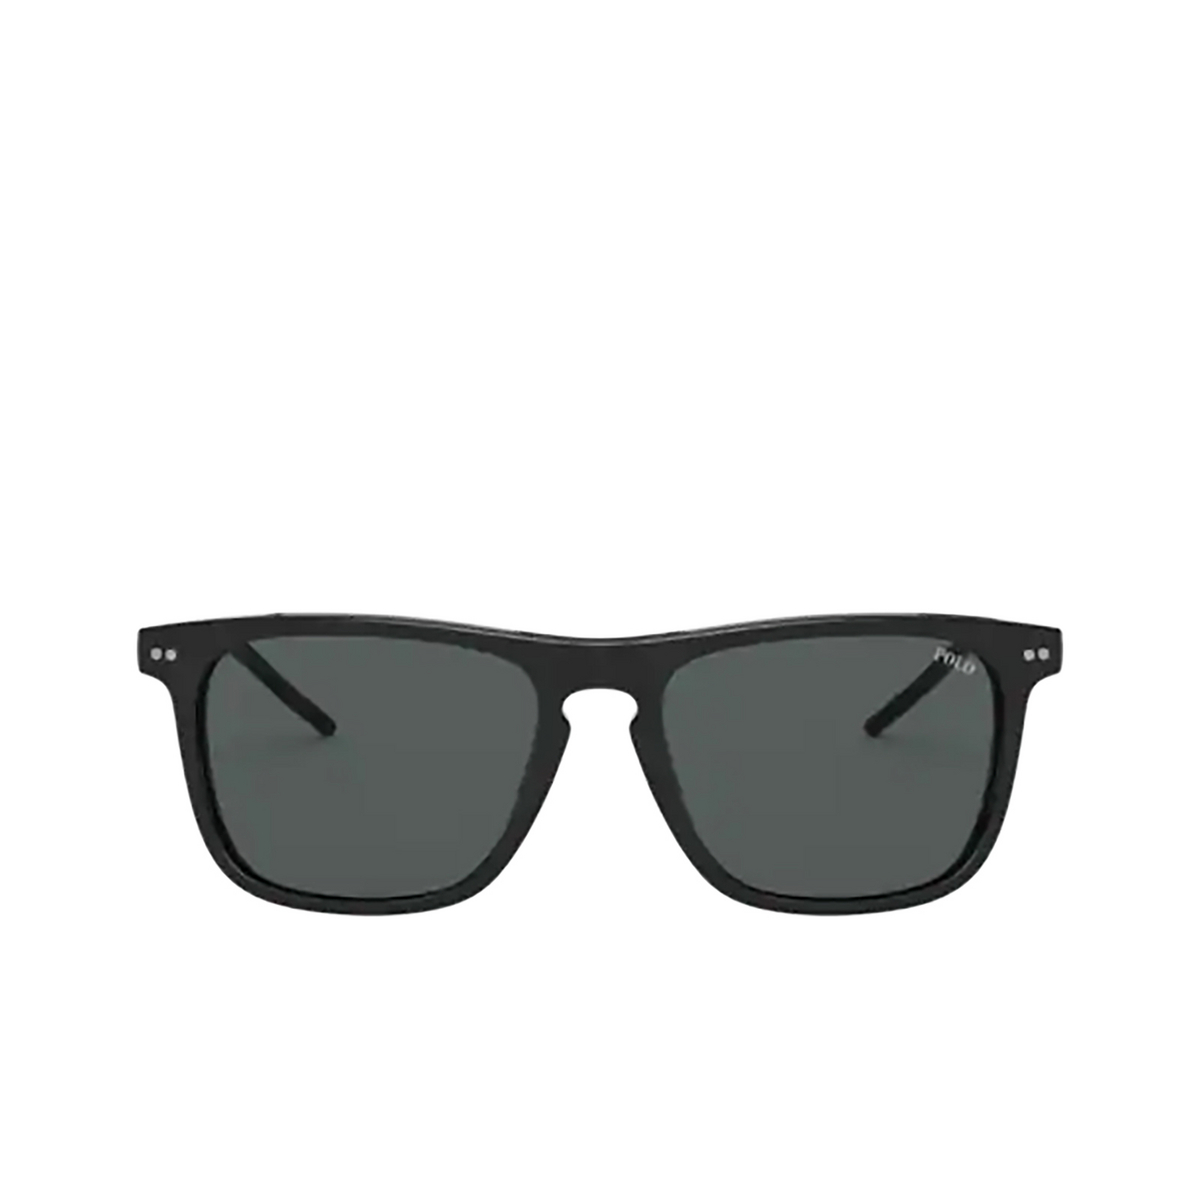 Polo Ralph Lauren® Square Sunglasses: PH4168 color Shiny Black 500187 - front view.